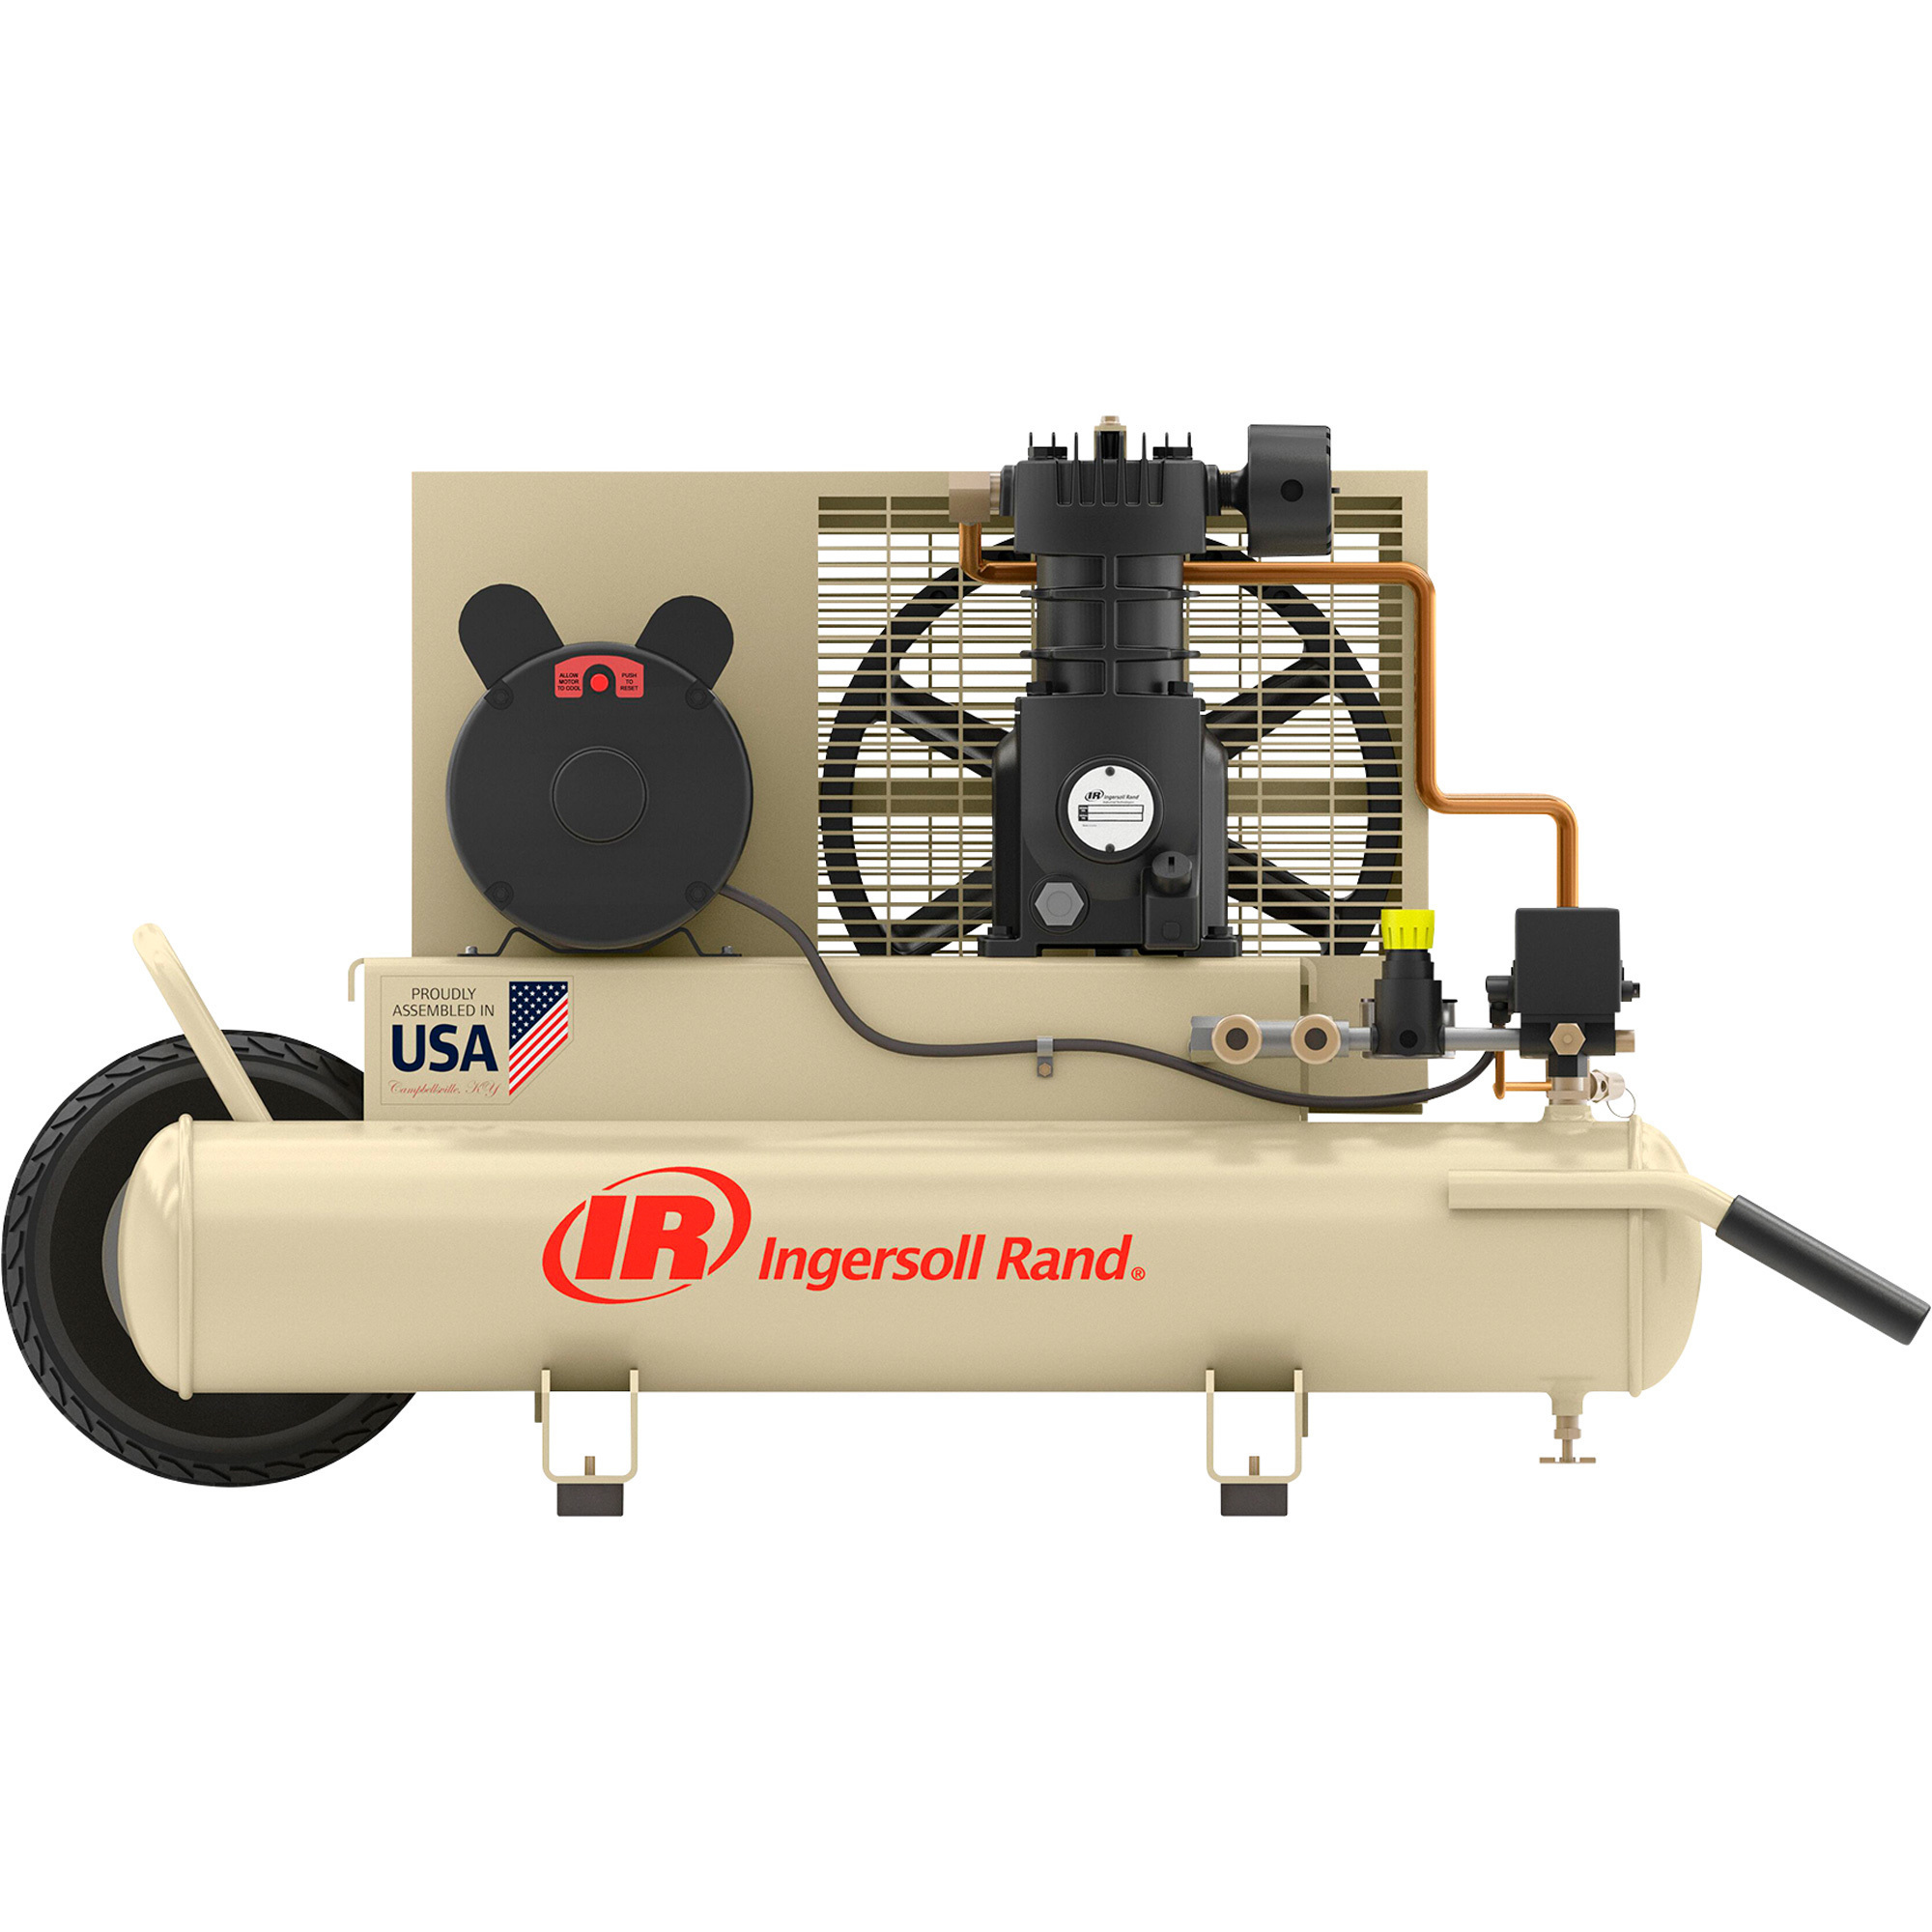 Ingersoll Rand Portable Electric Air Compressor, 3 HP, 230 Volt, 8 Gallon, Model SS3J3-WB